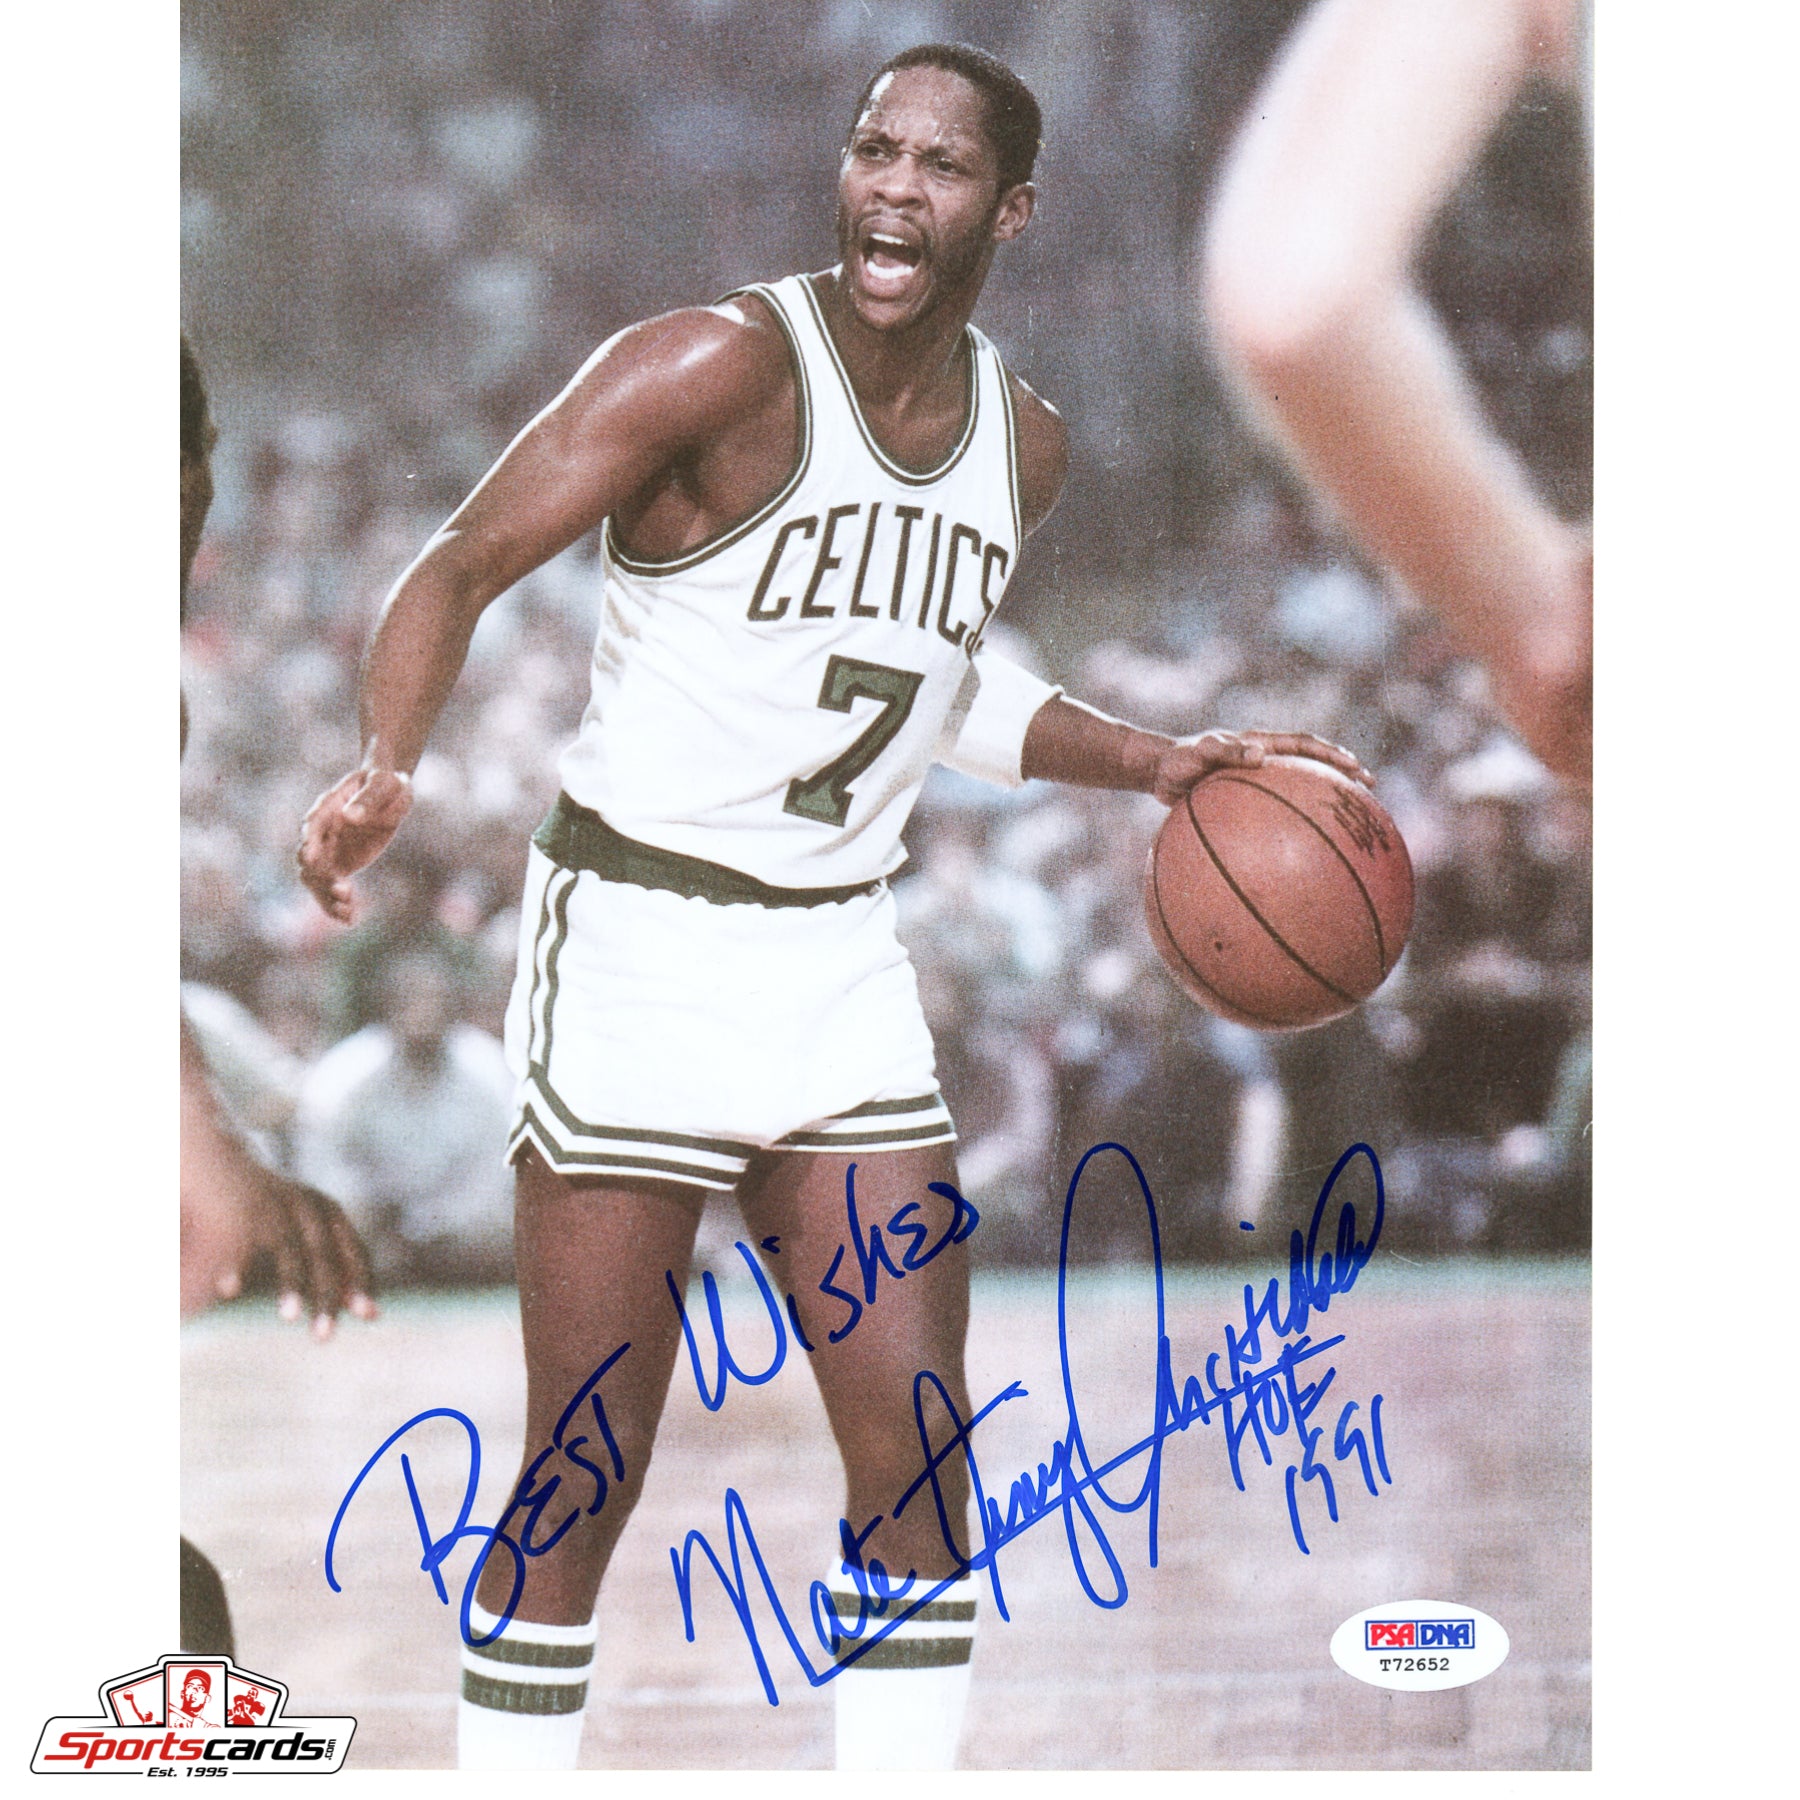 Nate "Tiny" Archibald Boston Celtics Signed Auto 8x10 Photo - PSA/DNA